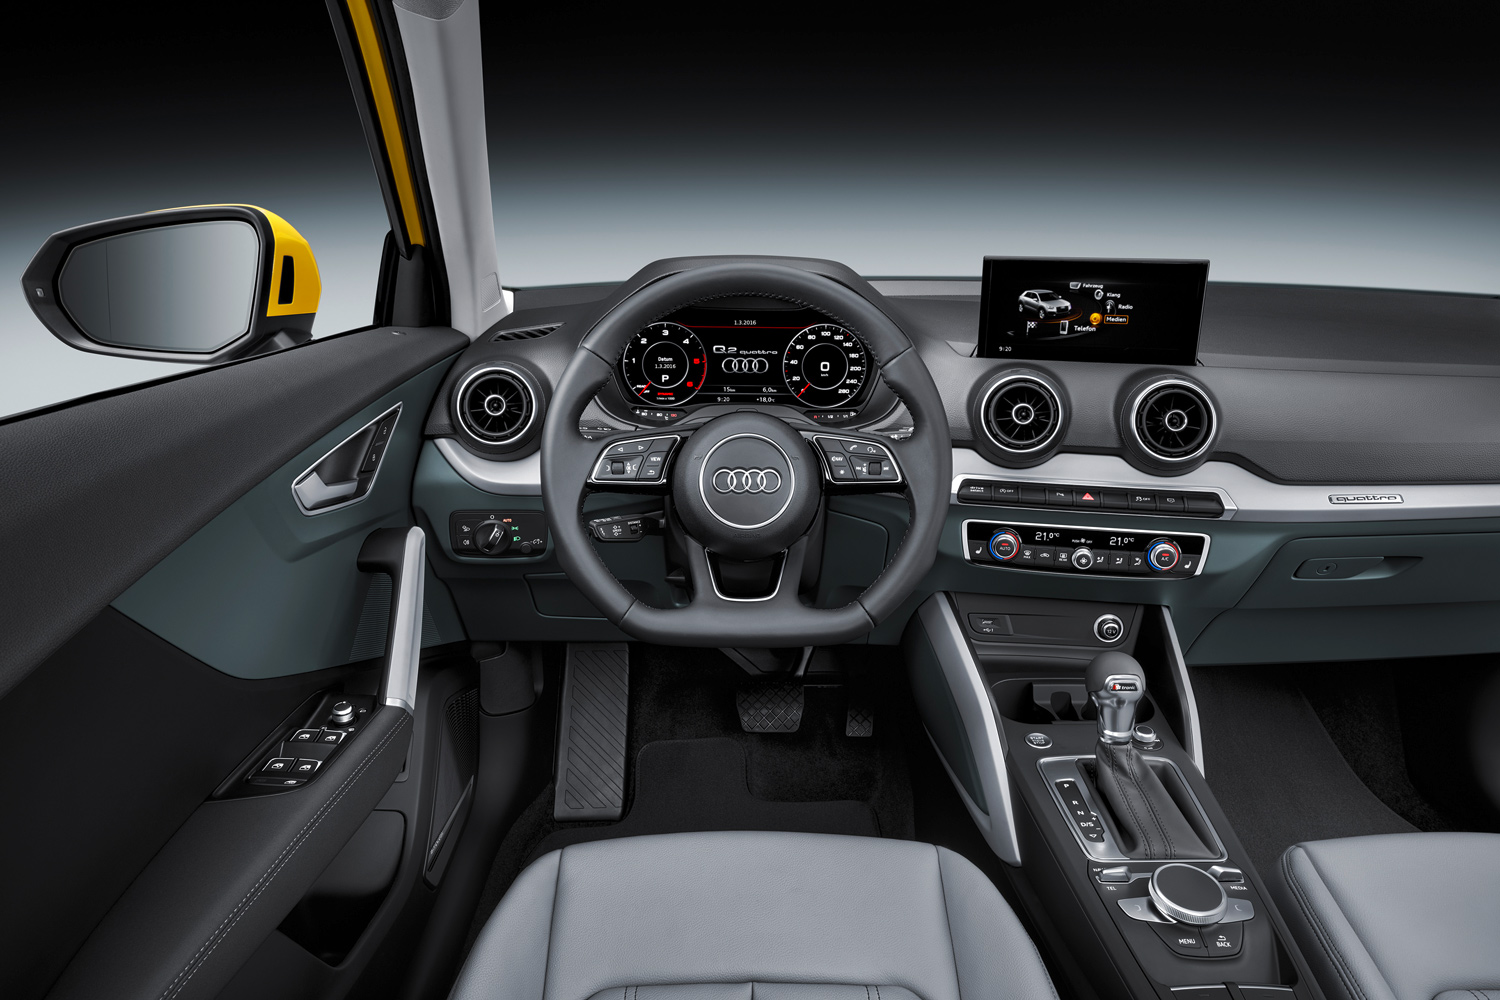 Audi Q2 Innenraum